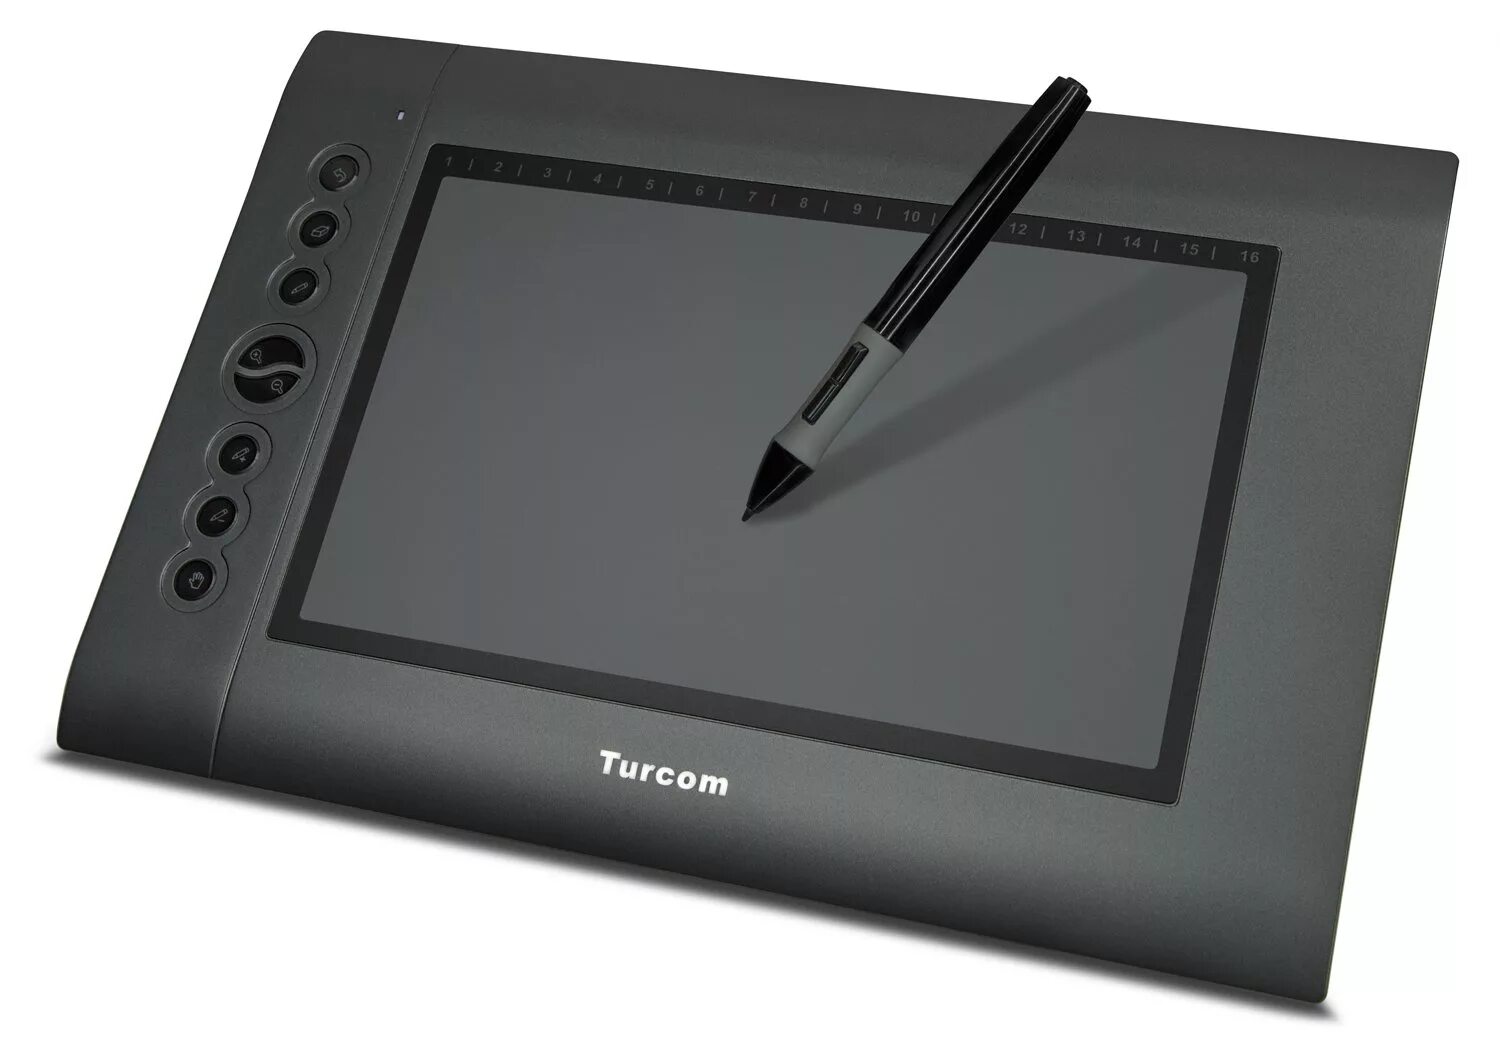 Pen drawing pad. Графический планшет gt 112. Графический планшет Keyron gt-112. Графический планшет XP-Pen. Wacom графический планшет a4.